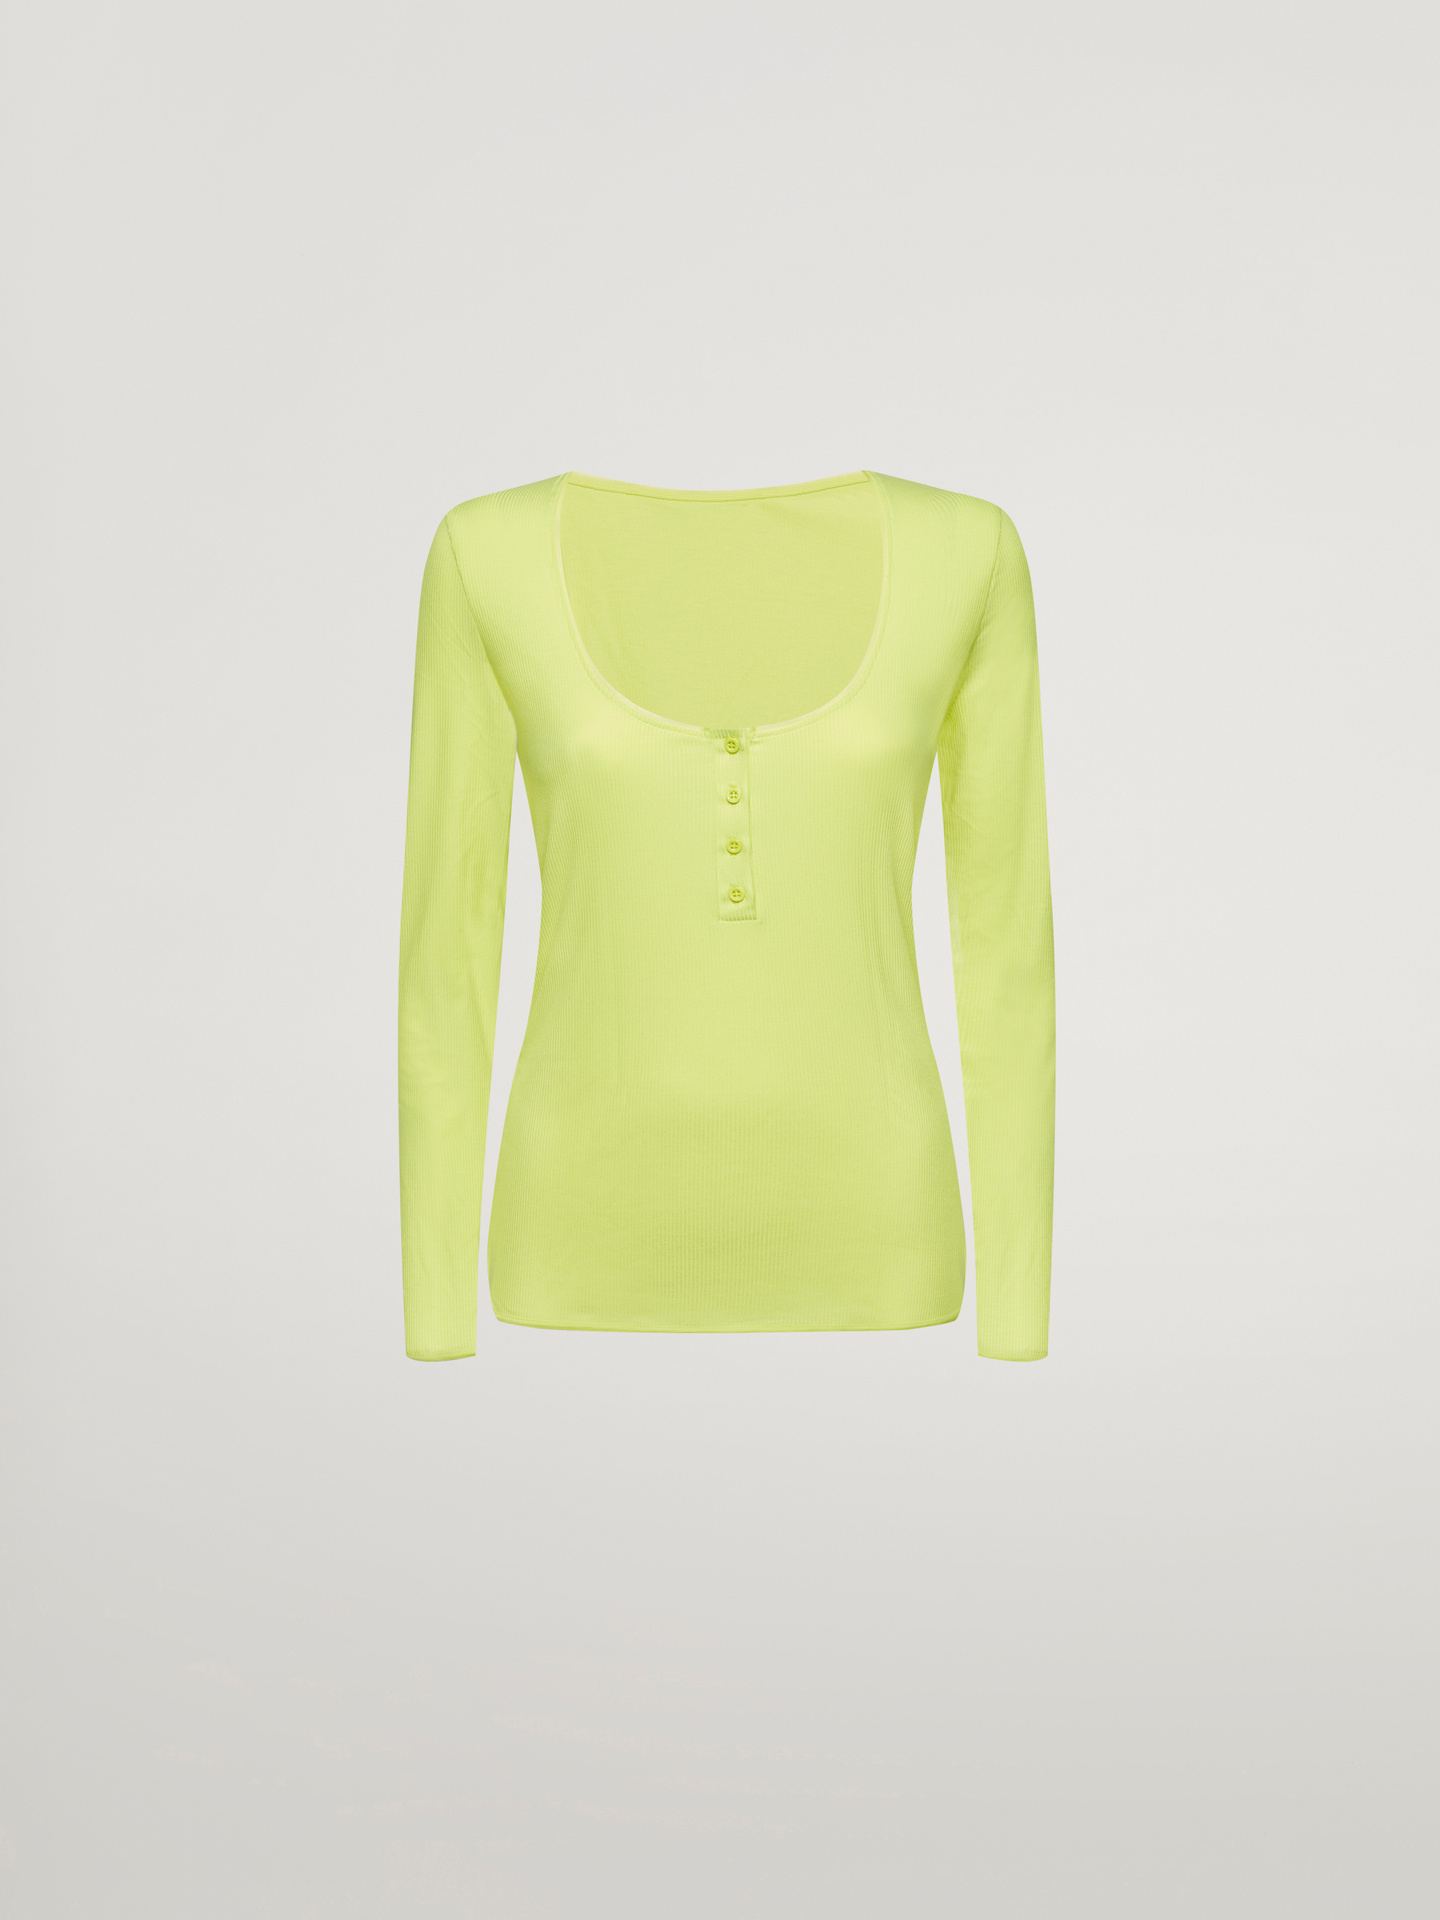 Wolford - Henley Top Long Sleeves, Frau, paradise green, Größe: S günstig online kaufen